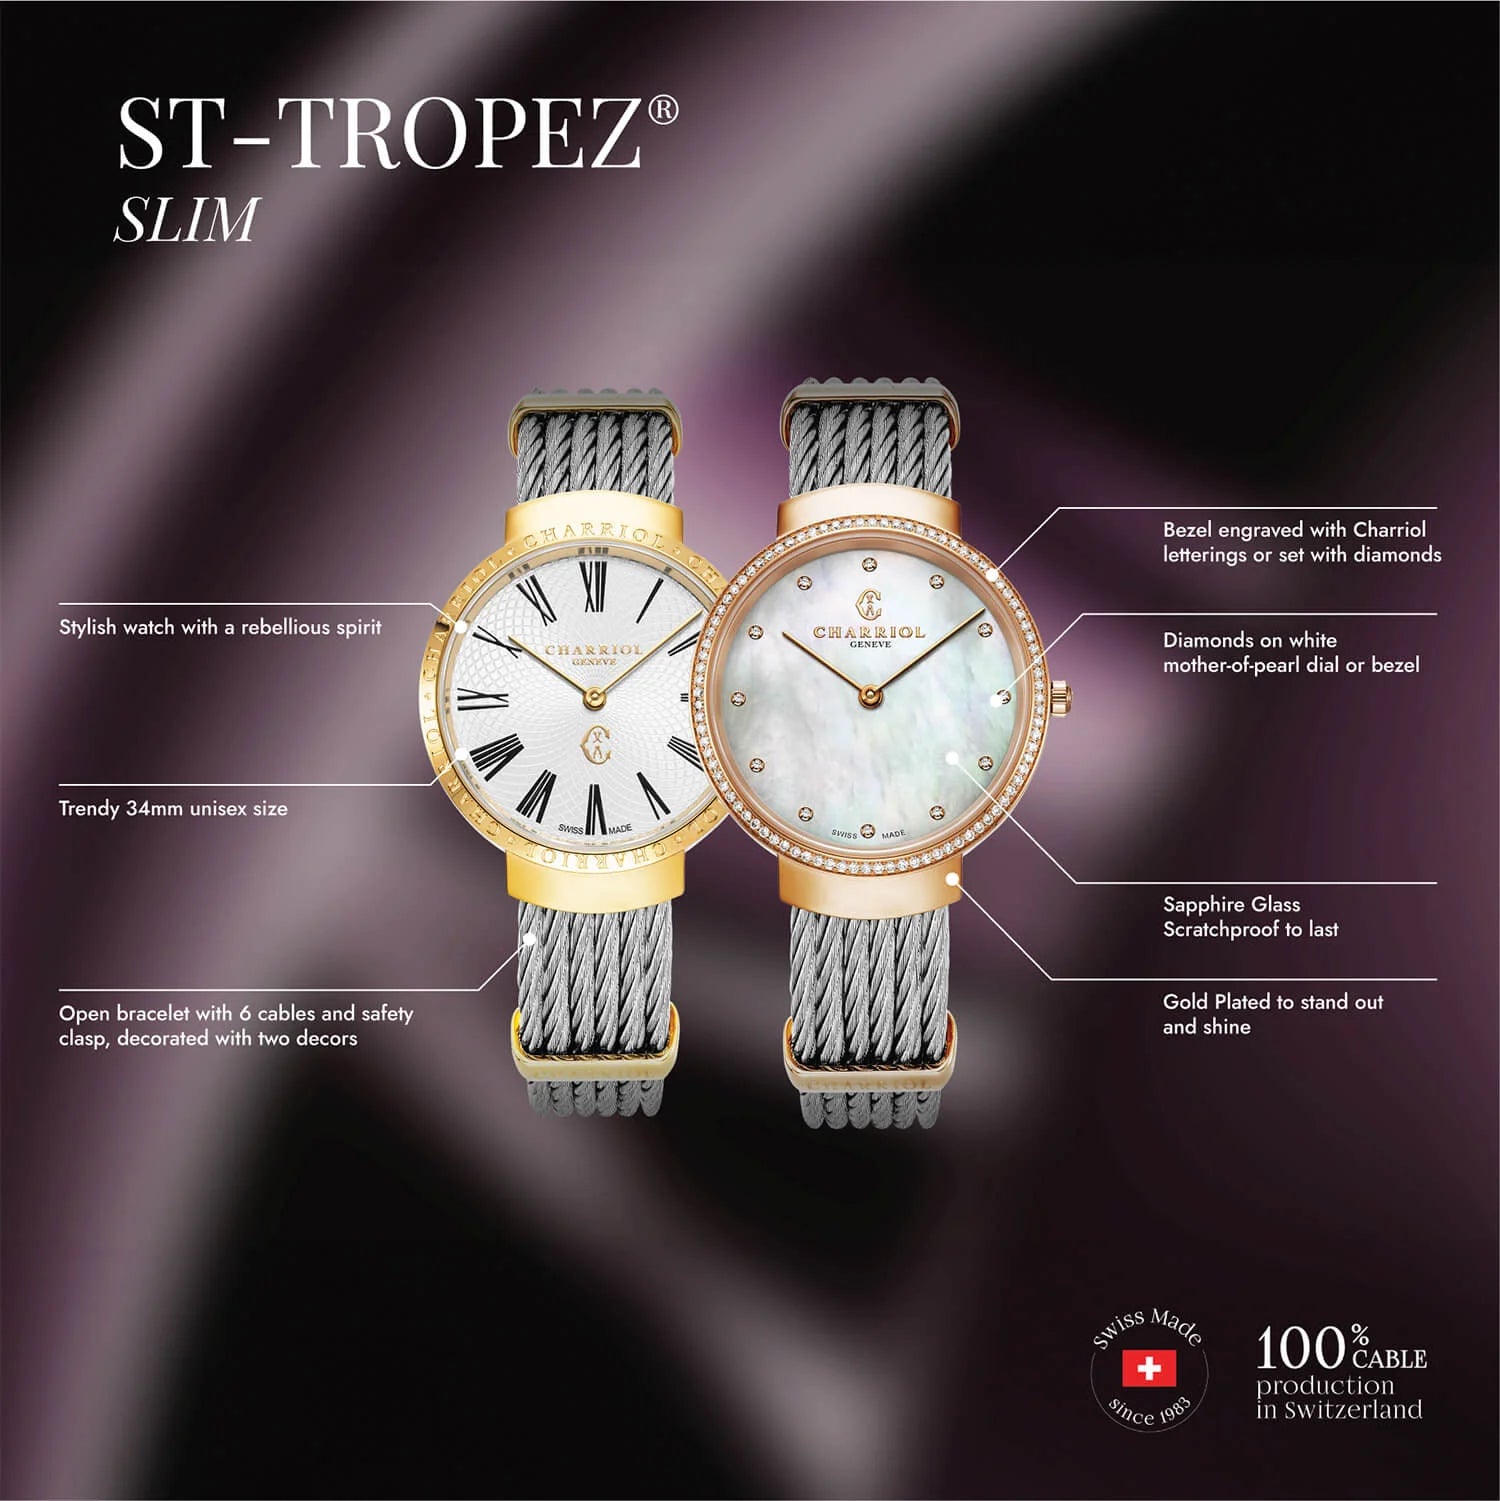 Slim Watch Star and Steel - Charriol Geneve -  Watch